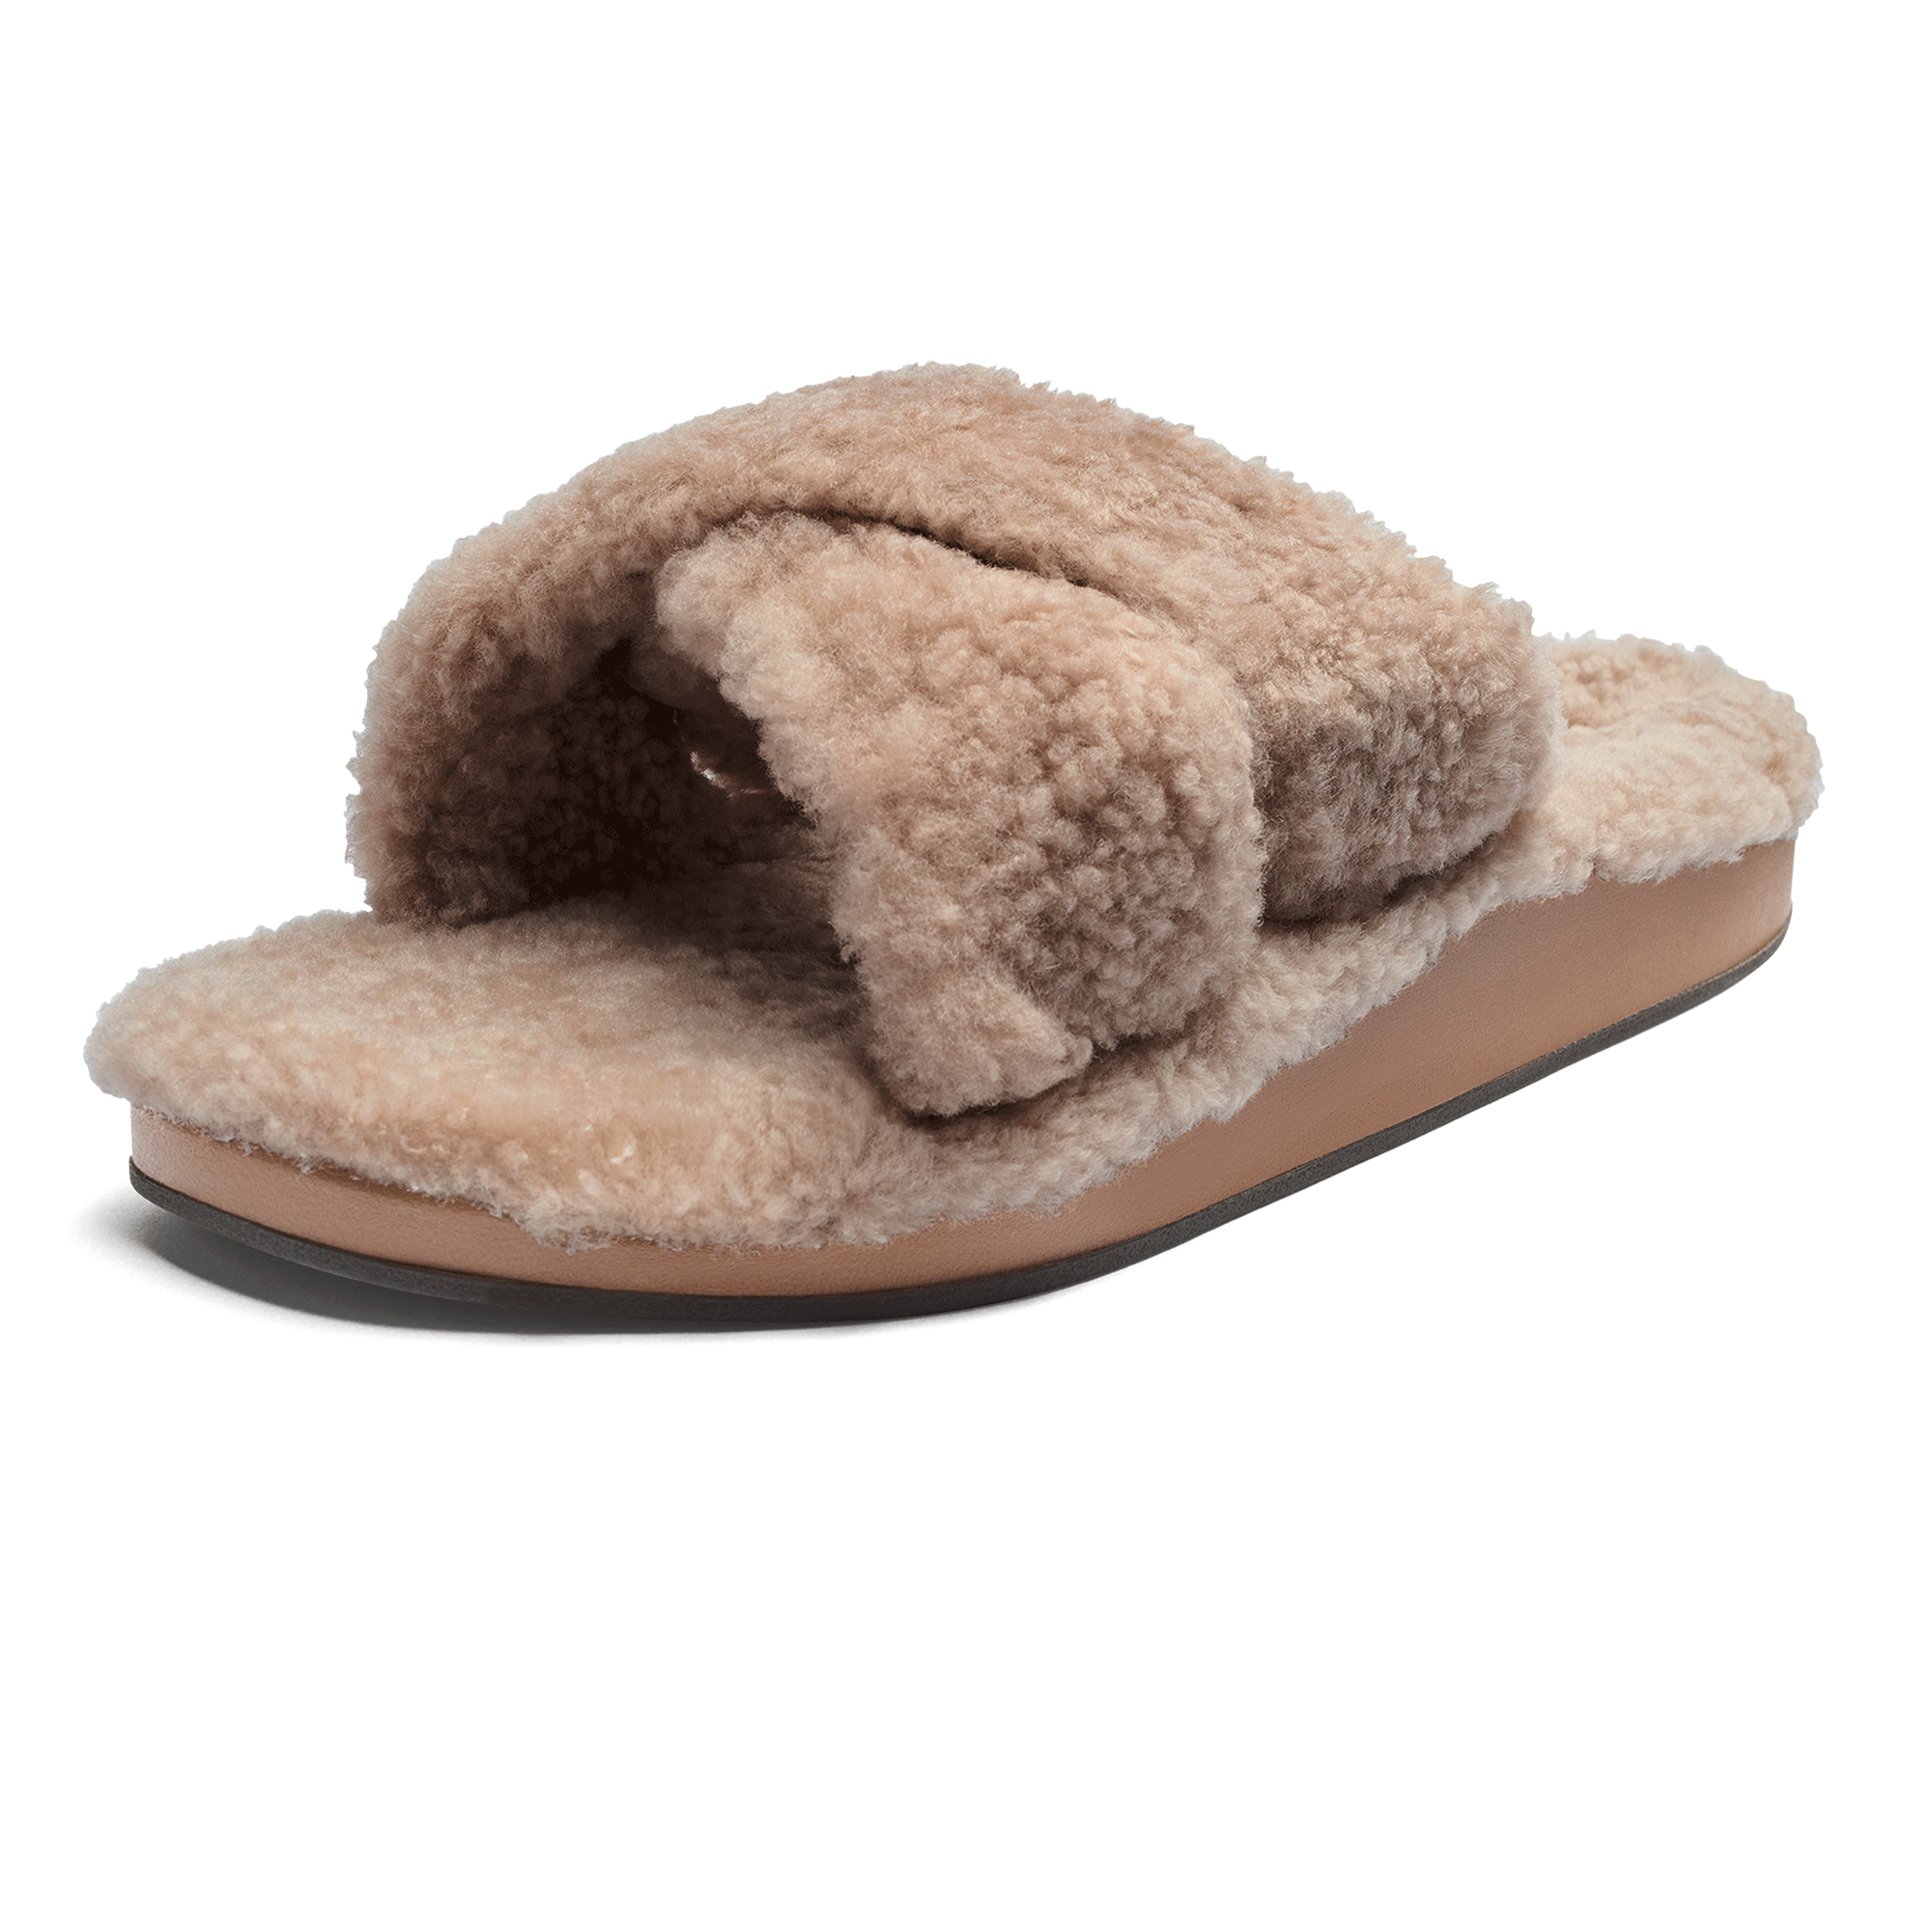 UGG OH YEAH Spots Pollen Slippers Sandals Sliders UK Womens Size 7 UK  -Brand New £35.00 - PicClick UK